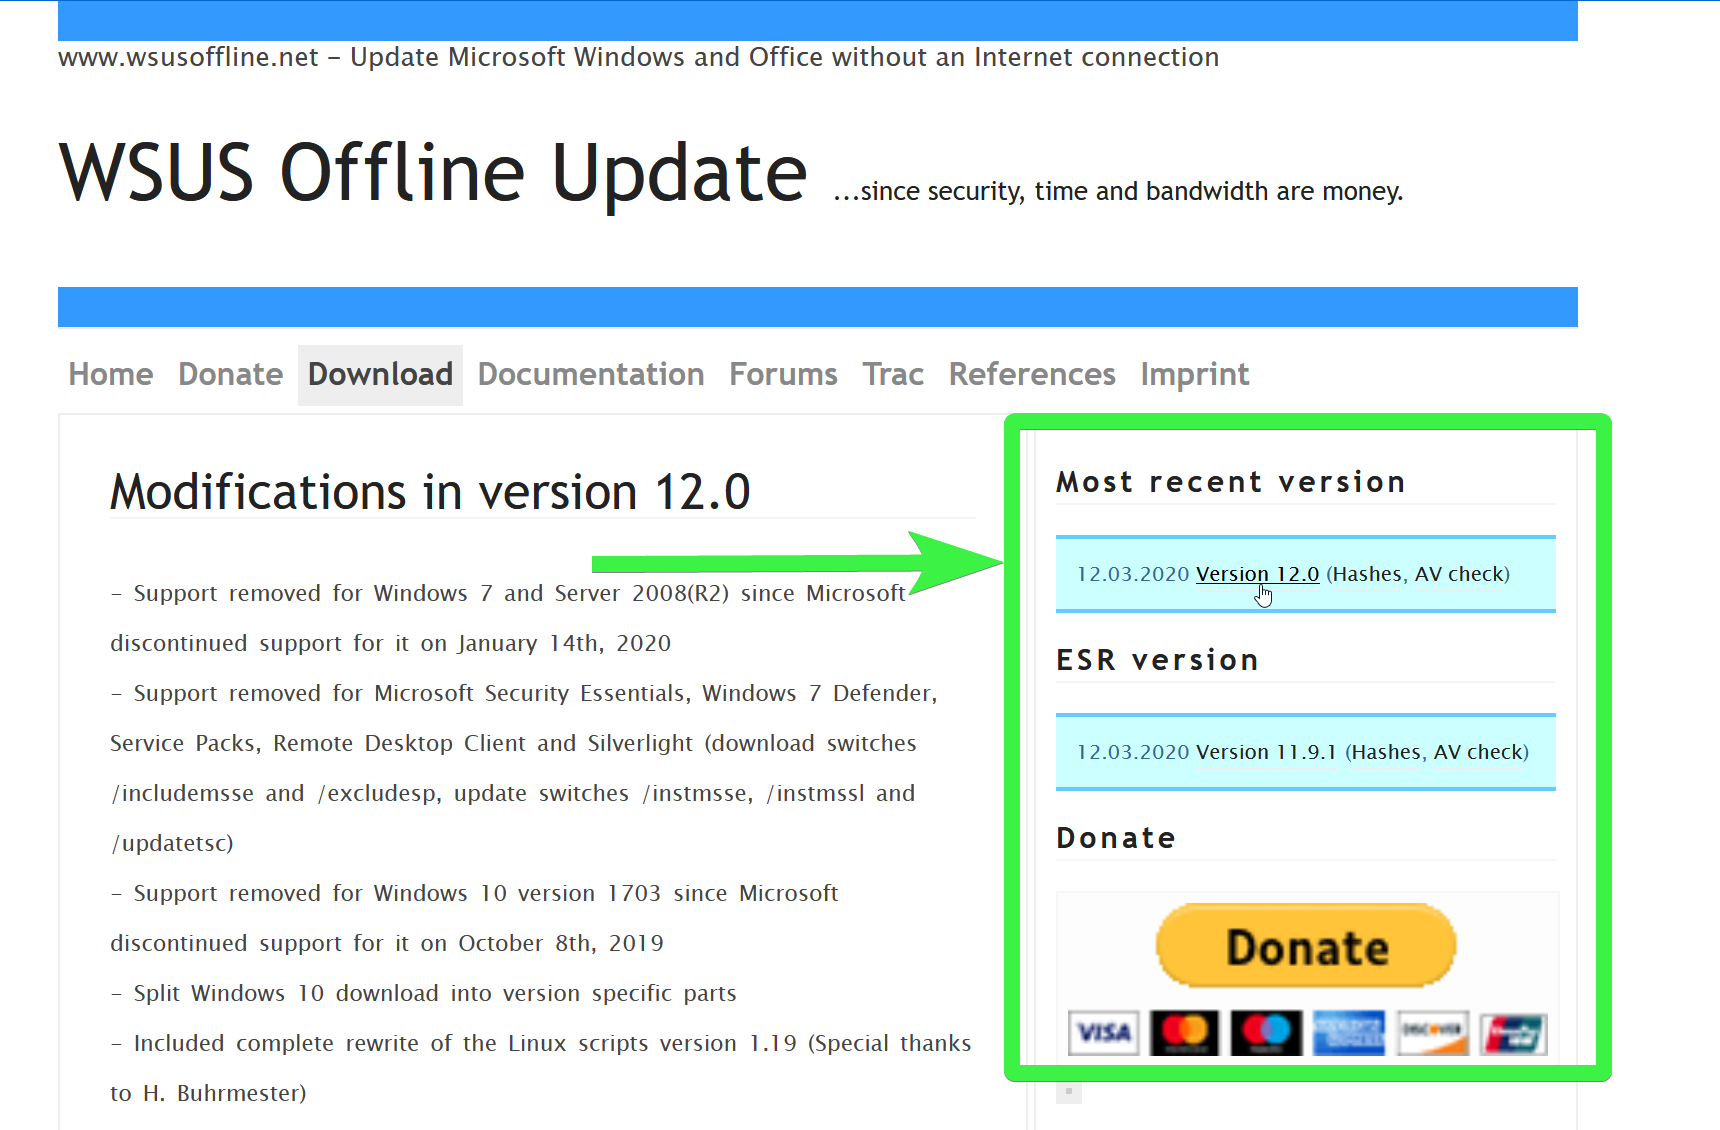 WSUS Offline Update download page 